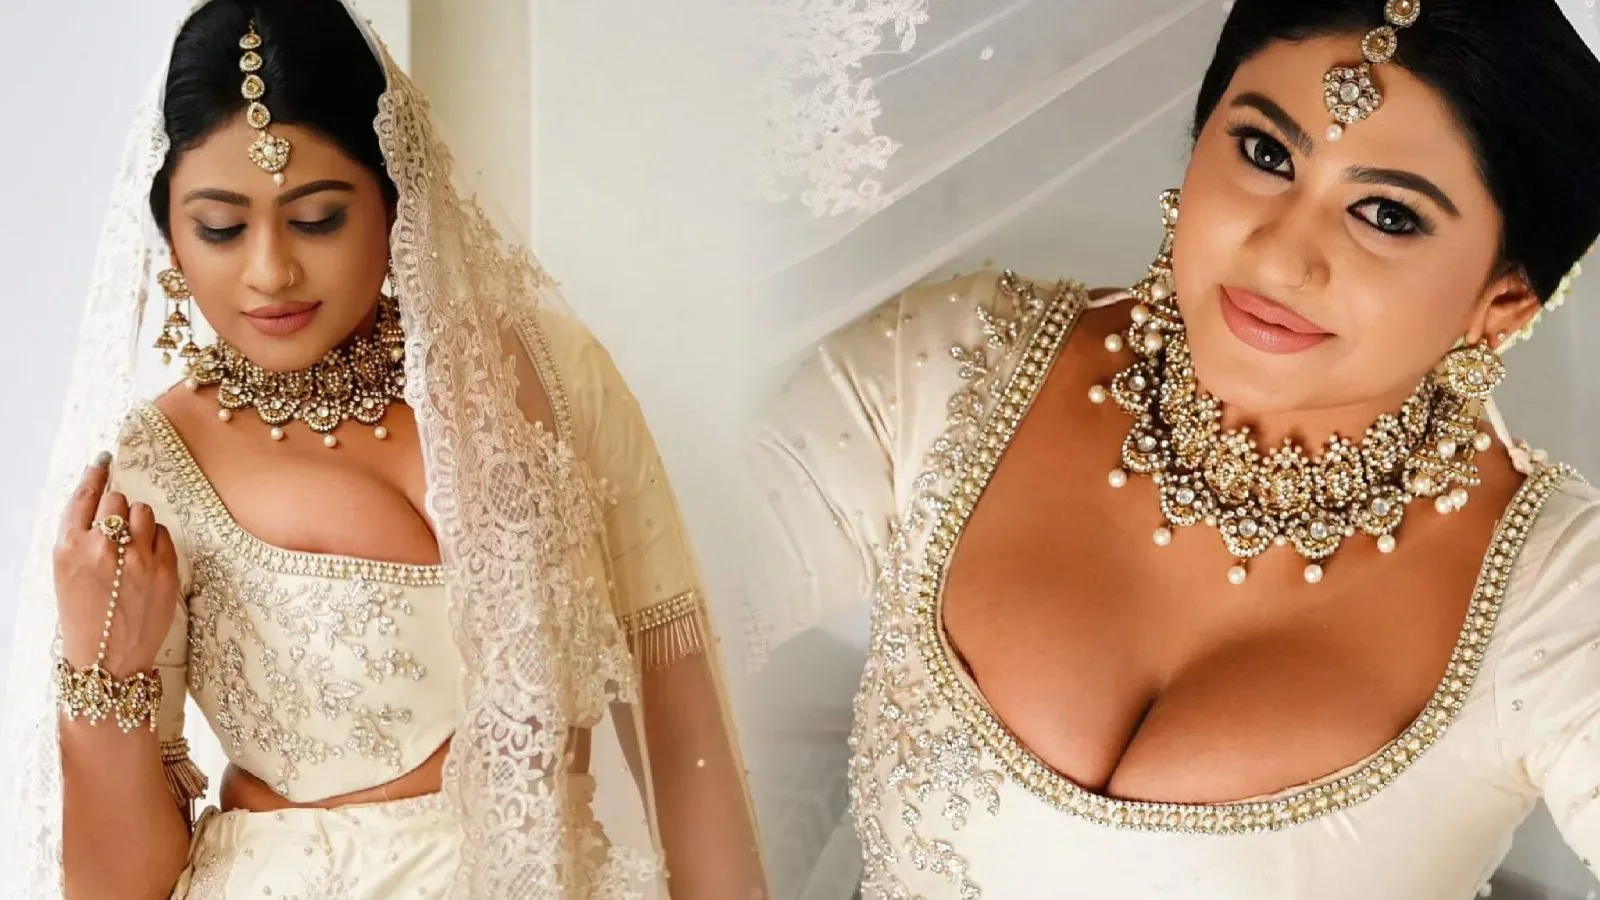 Actress Piumi Hansamali is hot in a white bridal lehenga